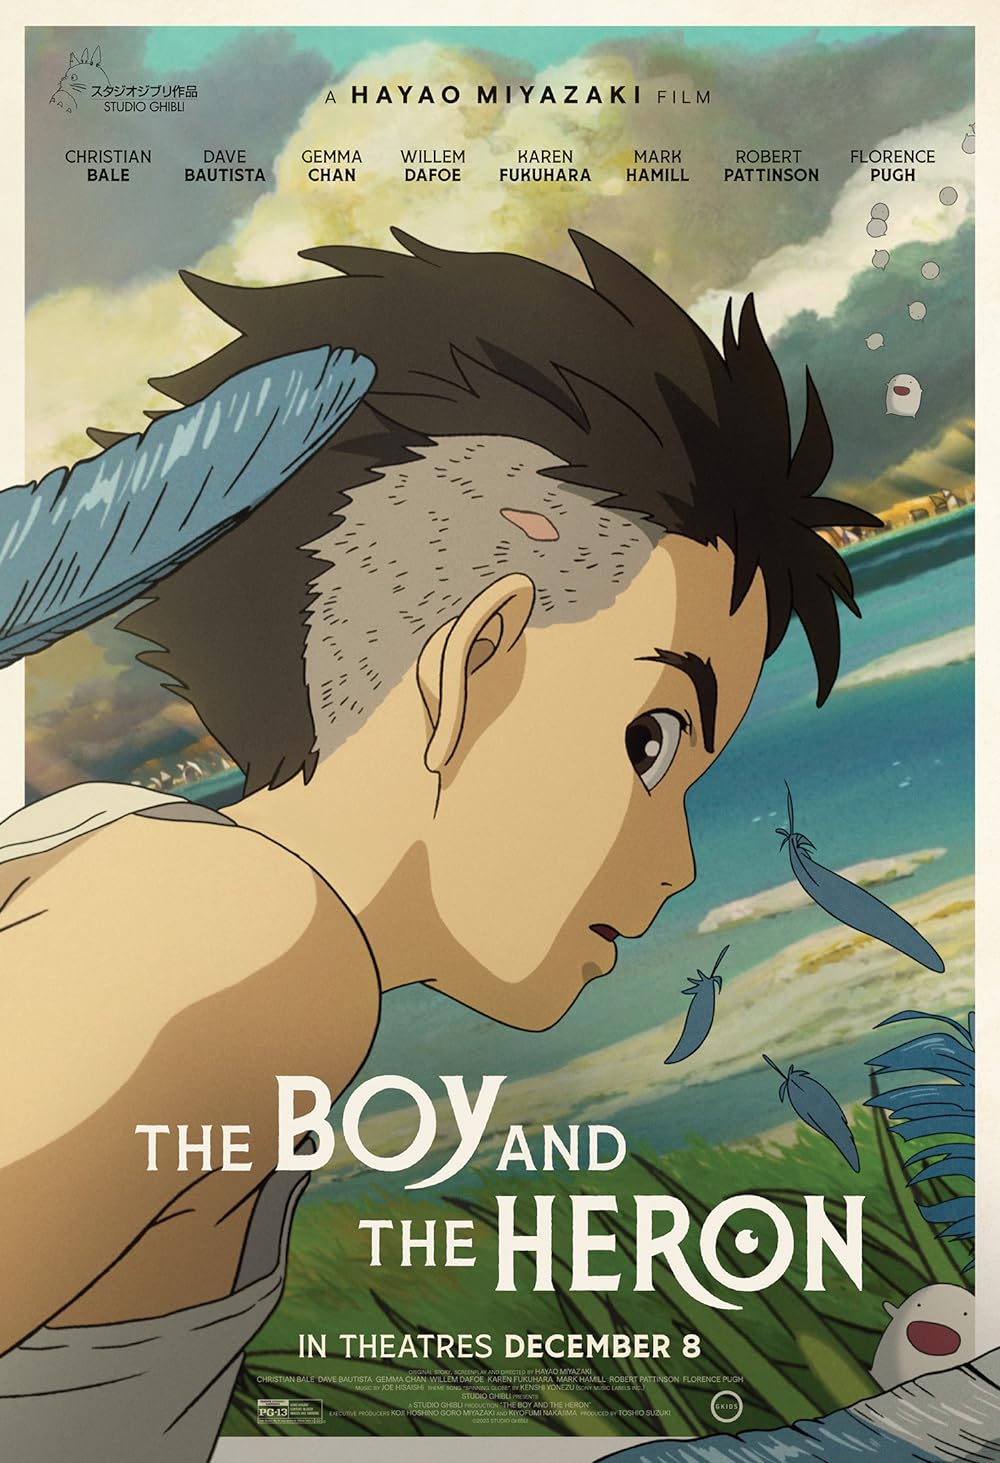 “The Boy and the Heron” by Hayao Miyazaki and Toshio Suzuki